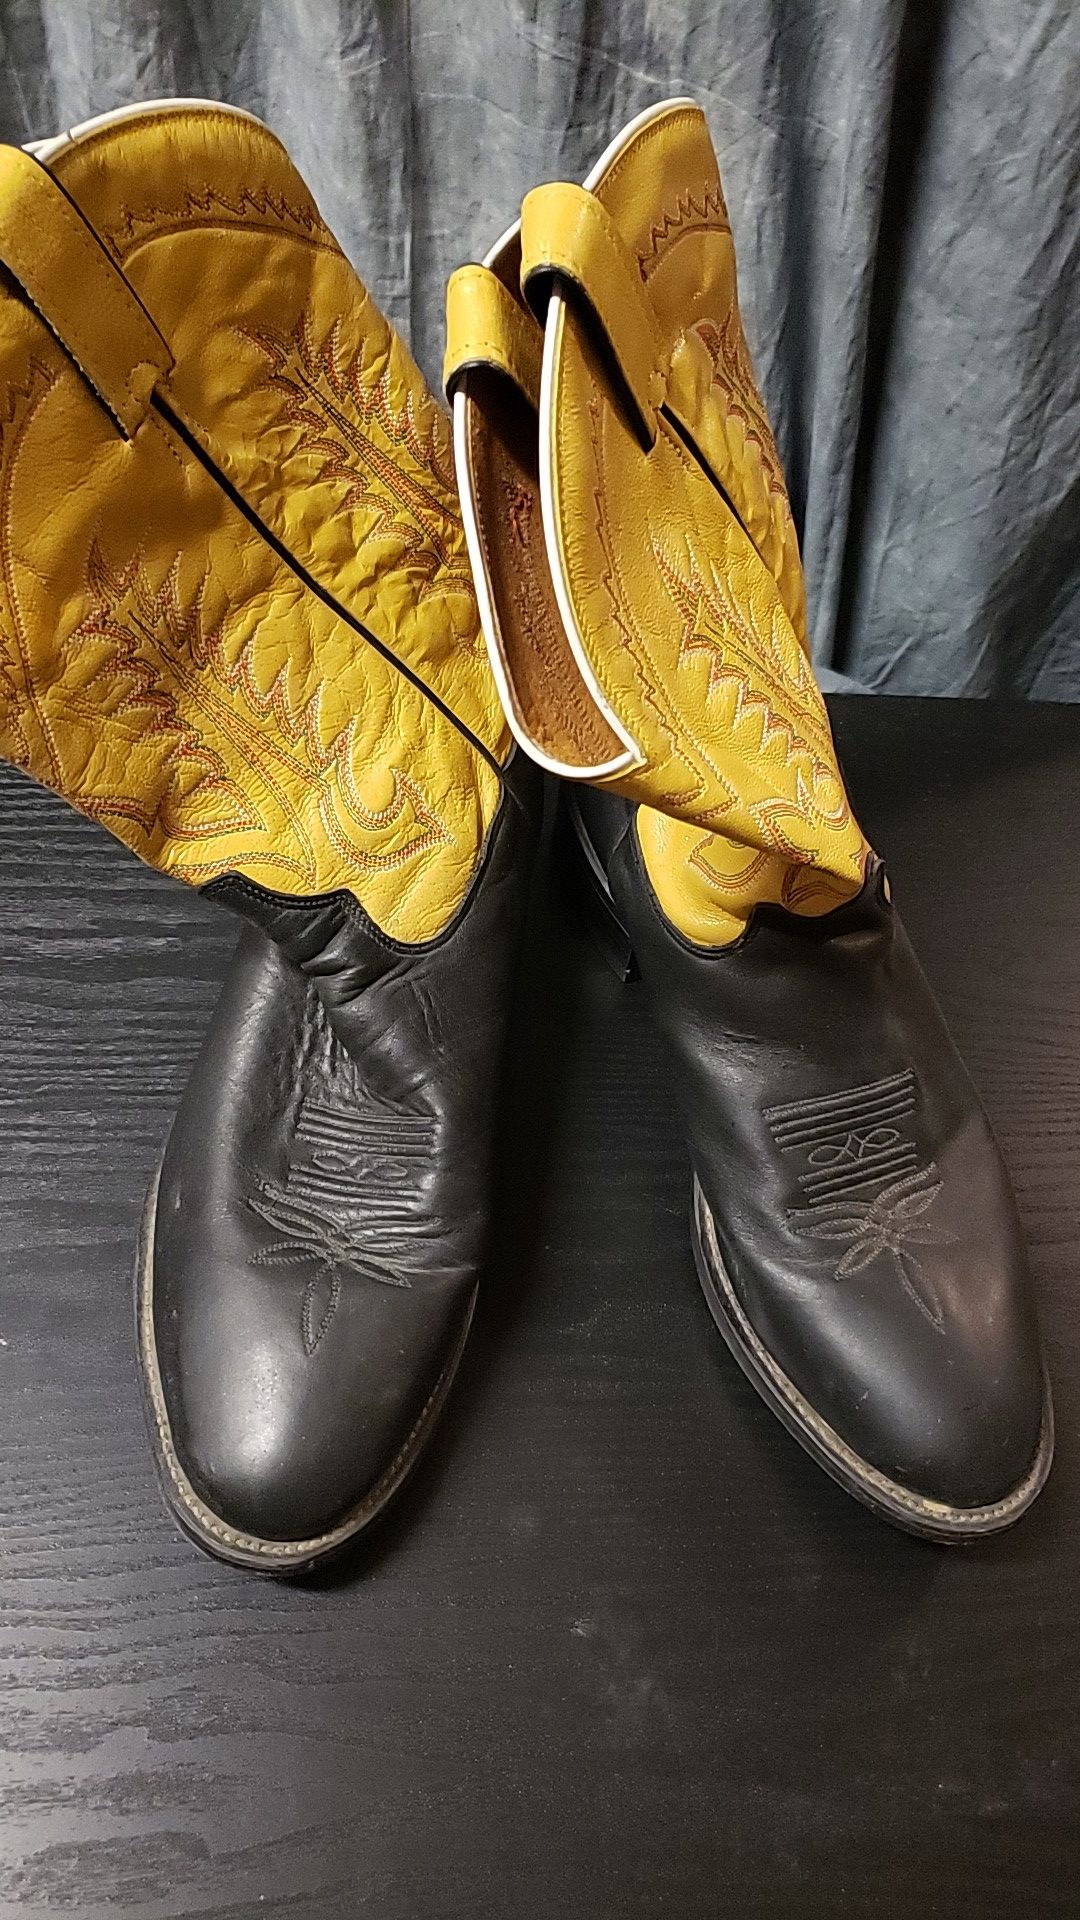 Mens Cowboy Boots size 10